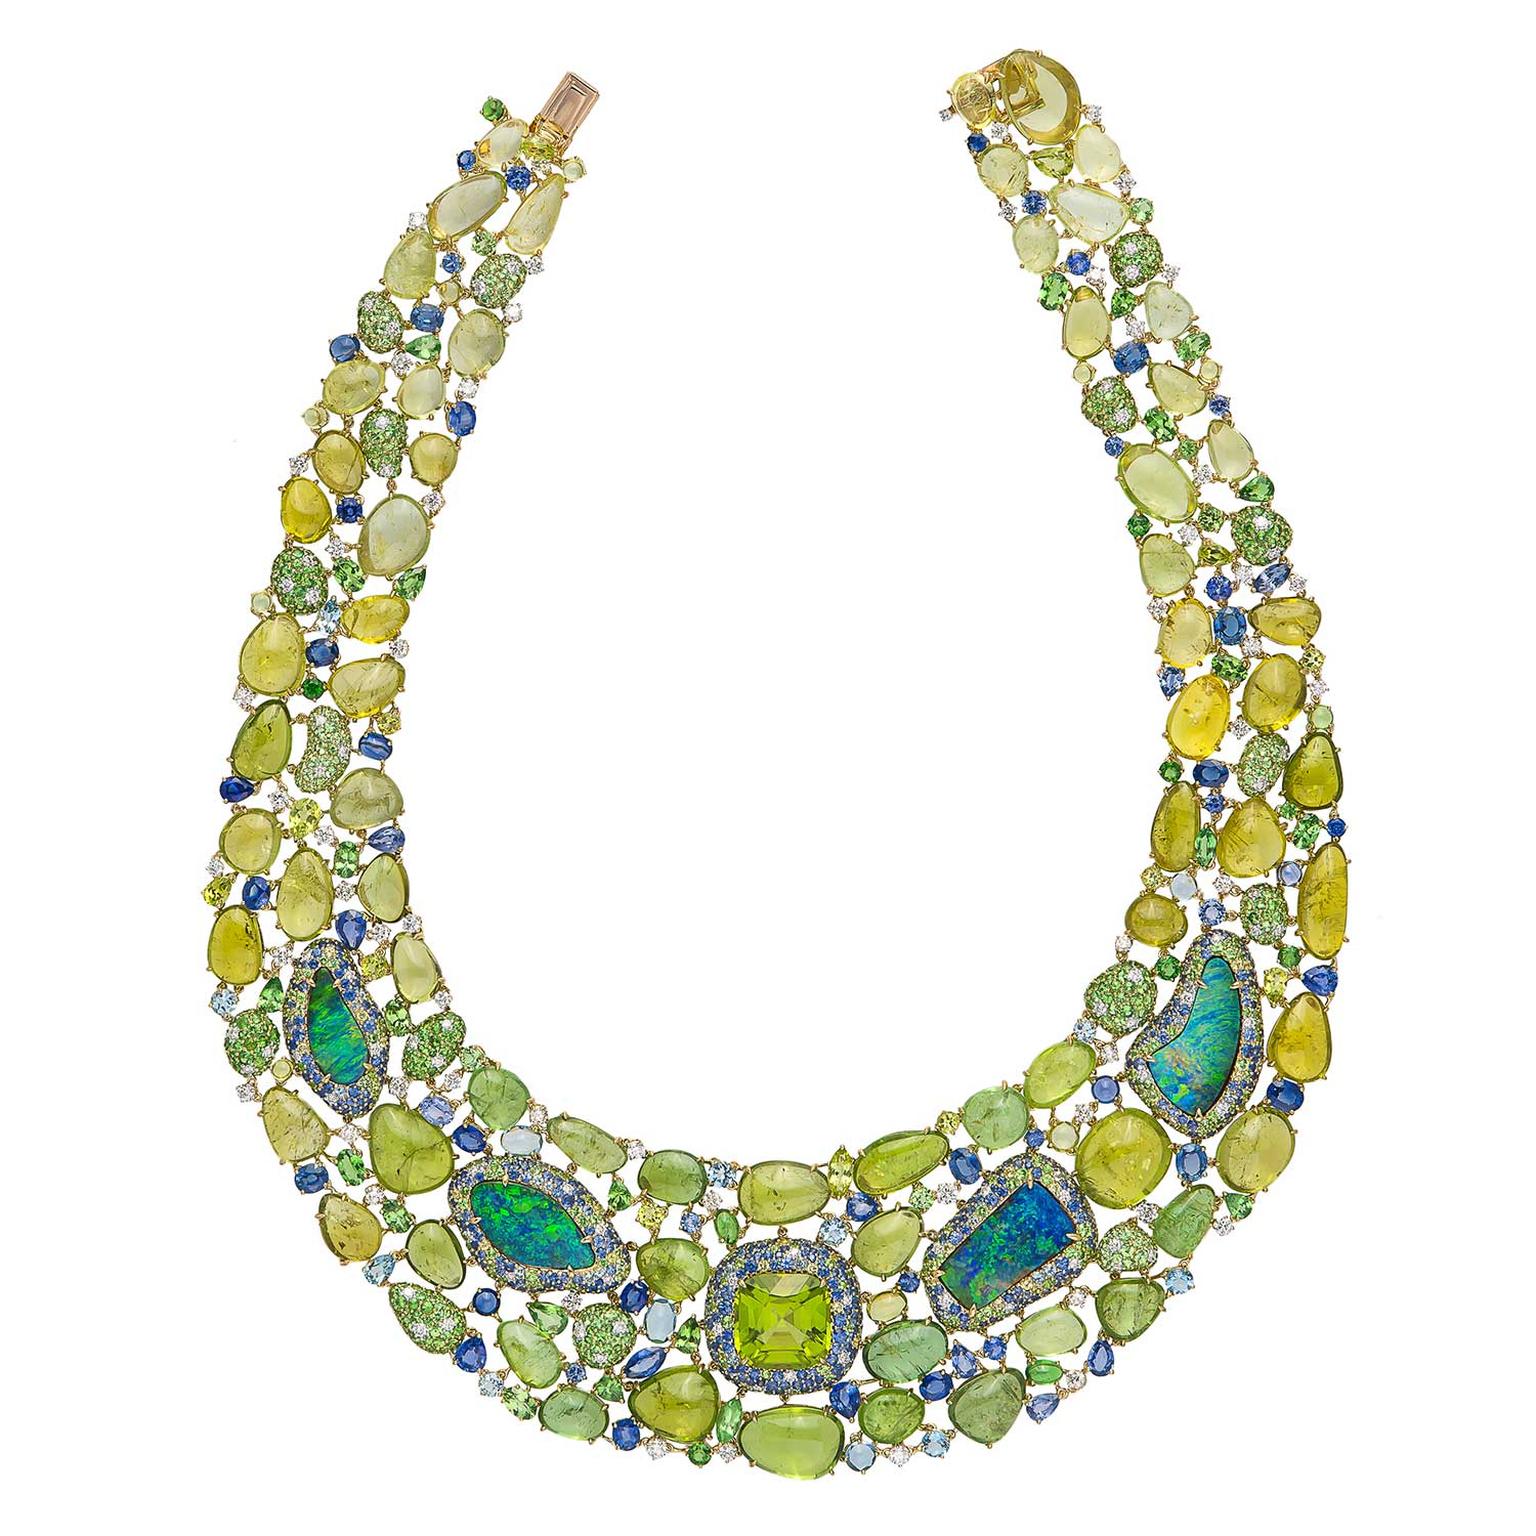 Margot McKinney Exotic Abundance collier featuring Paraiba tourmalines, gemstones and Lightning Ridge opals